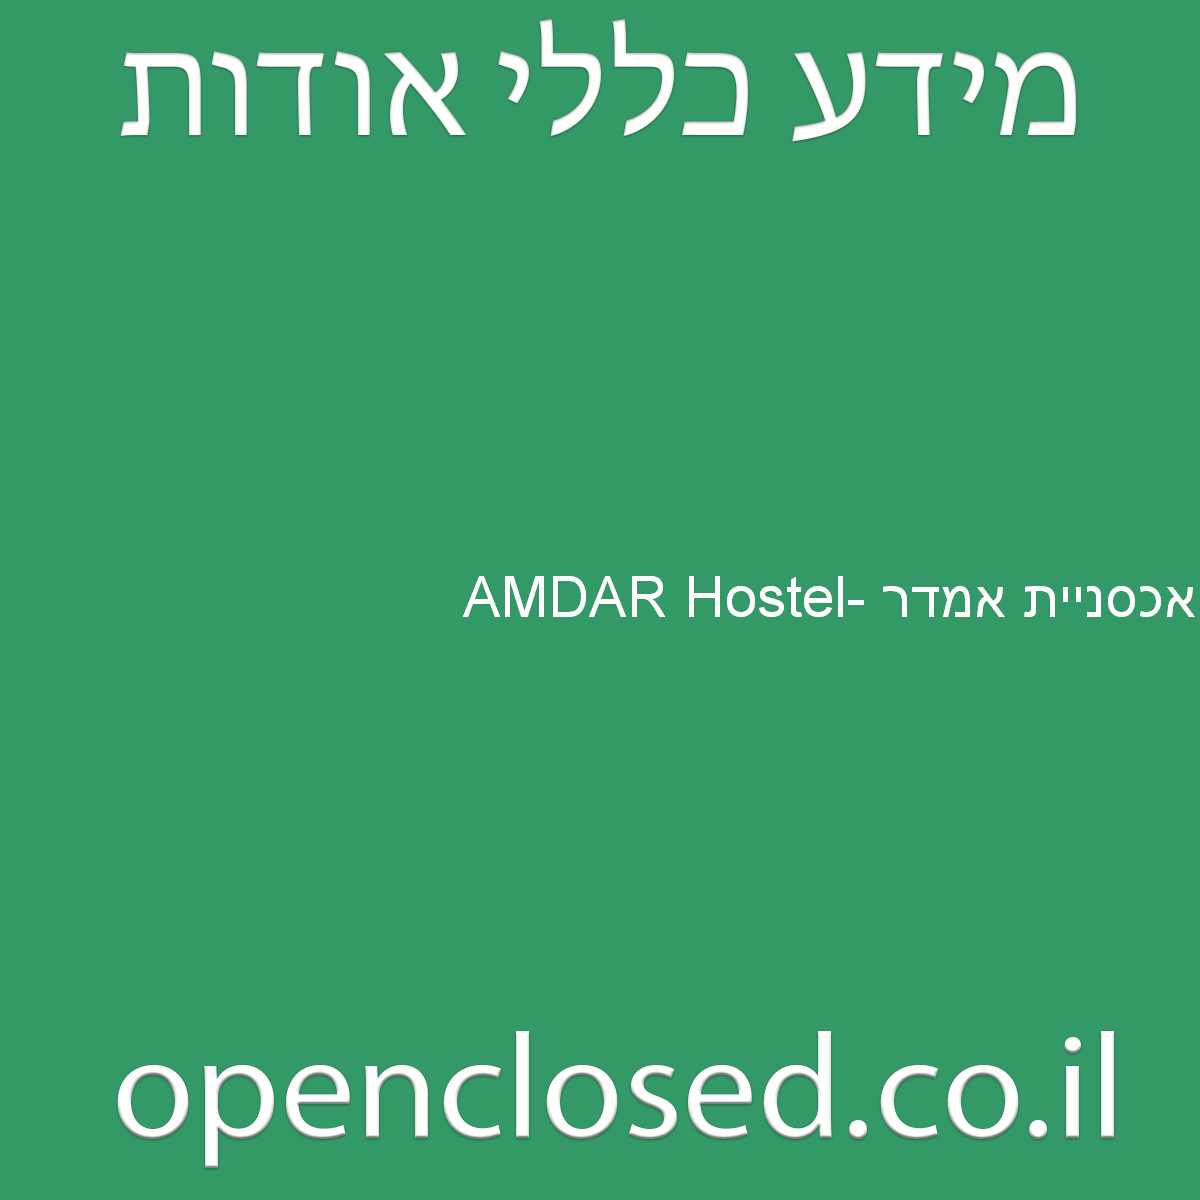 AMDAR Hostel- אכסניית אמדר